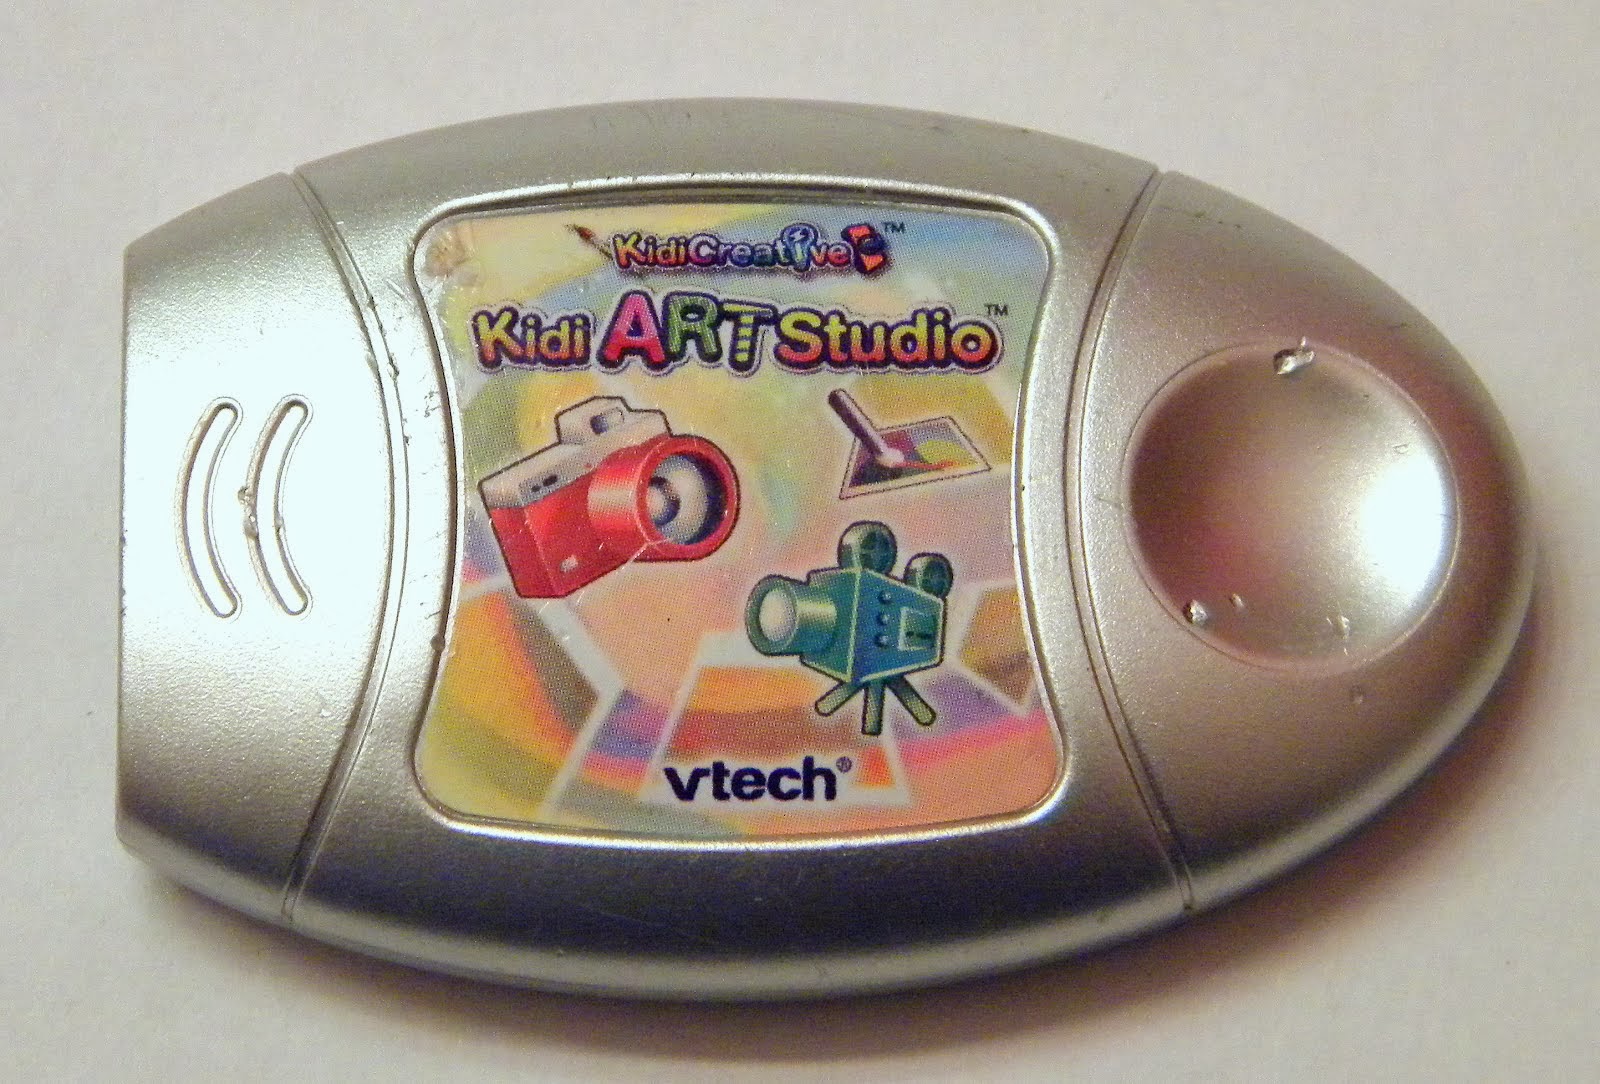 Vtech KidiCreative Kidi Art Studio Cartridge